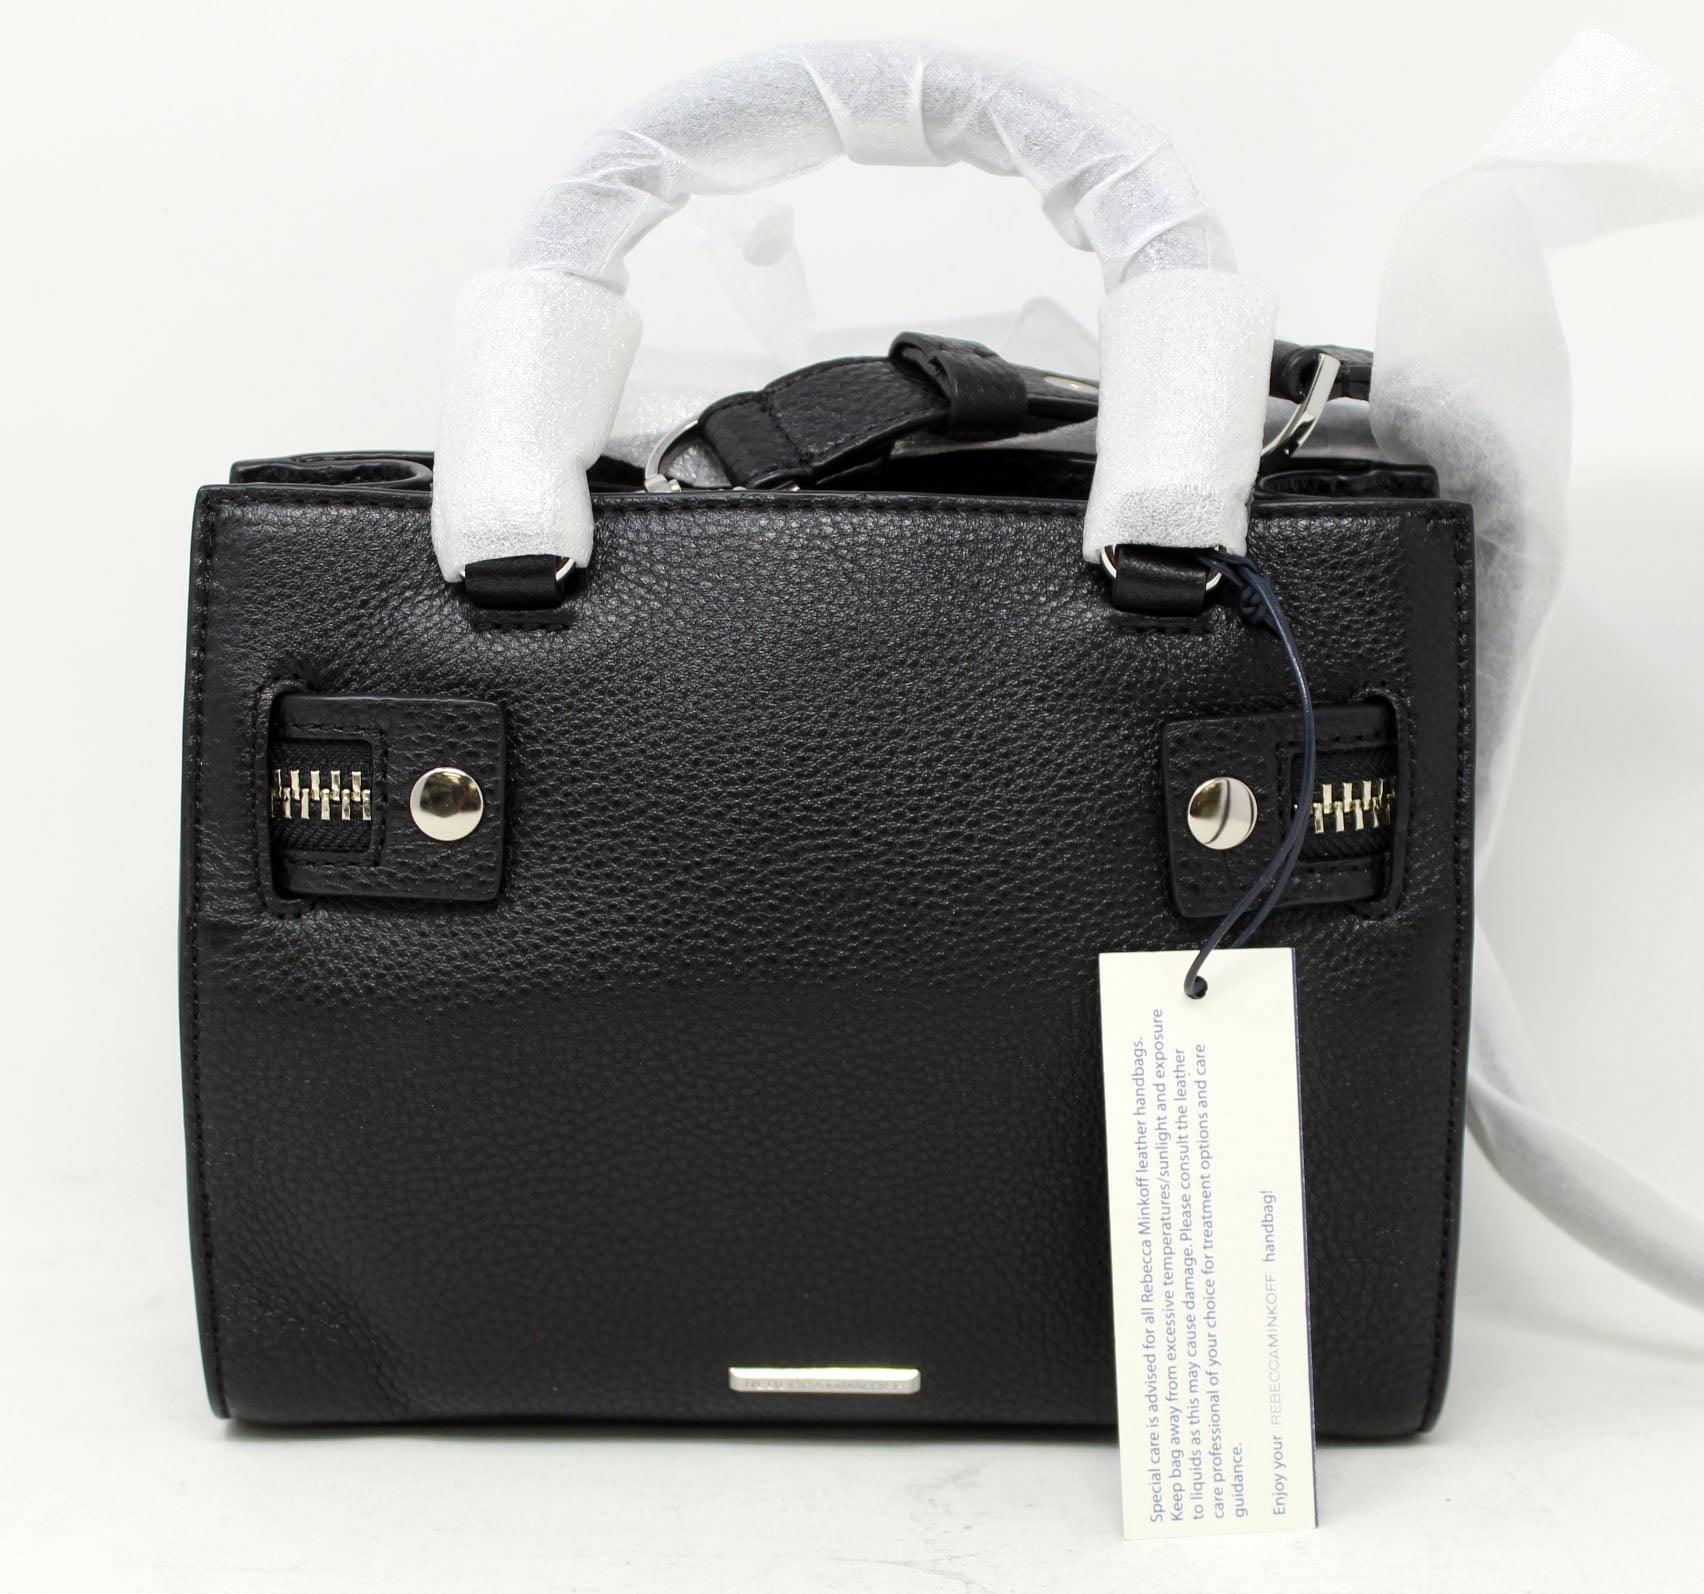 Bcbgeneration Sammie Satchel | Accessorising - Brand Name / Designer  Handbags For Carry & Wear... Share If You Care! | Satchel, Bcbgeneration,  Satchel handbags